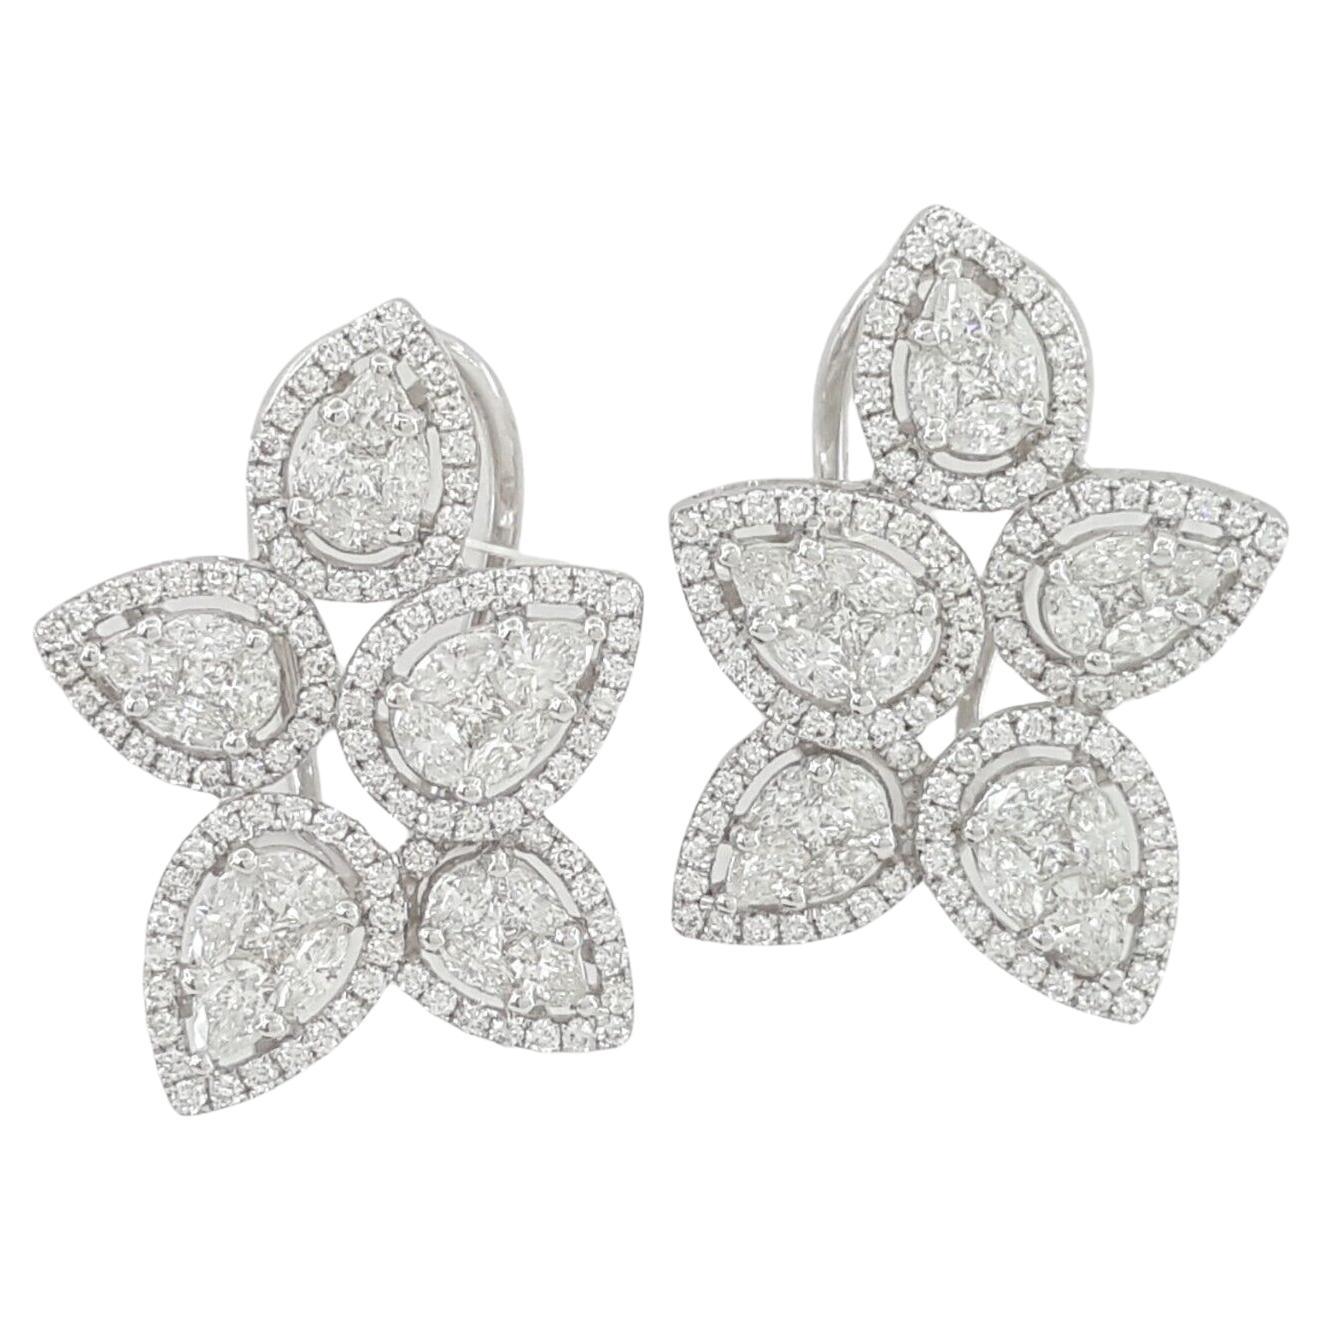 2.50 Carat Diamond Cluster Earrings For Sale